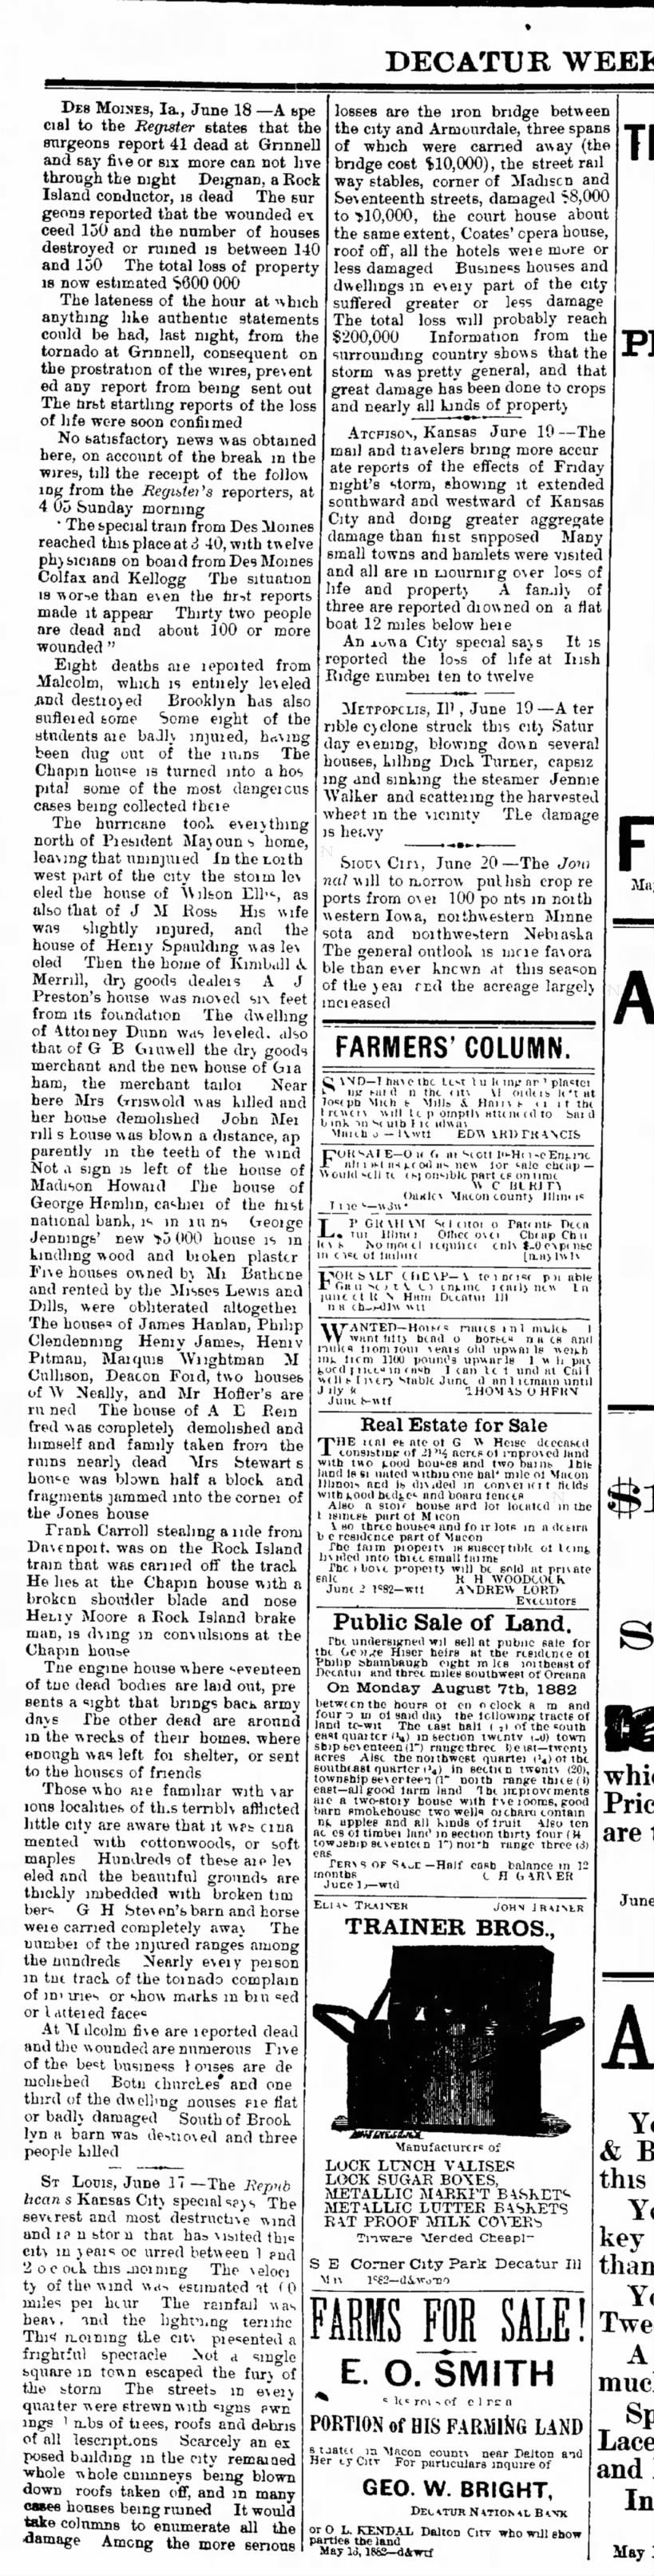 Deignan Tornado Death, Decatur Weekly Republican, Thursday, June 22, 1882